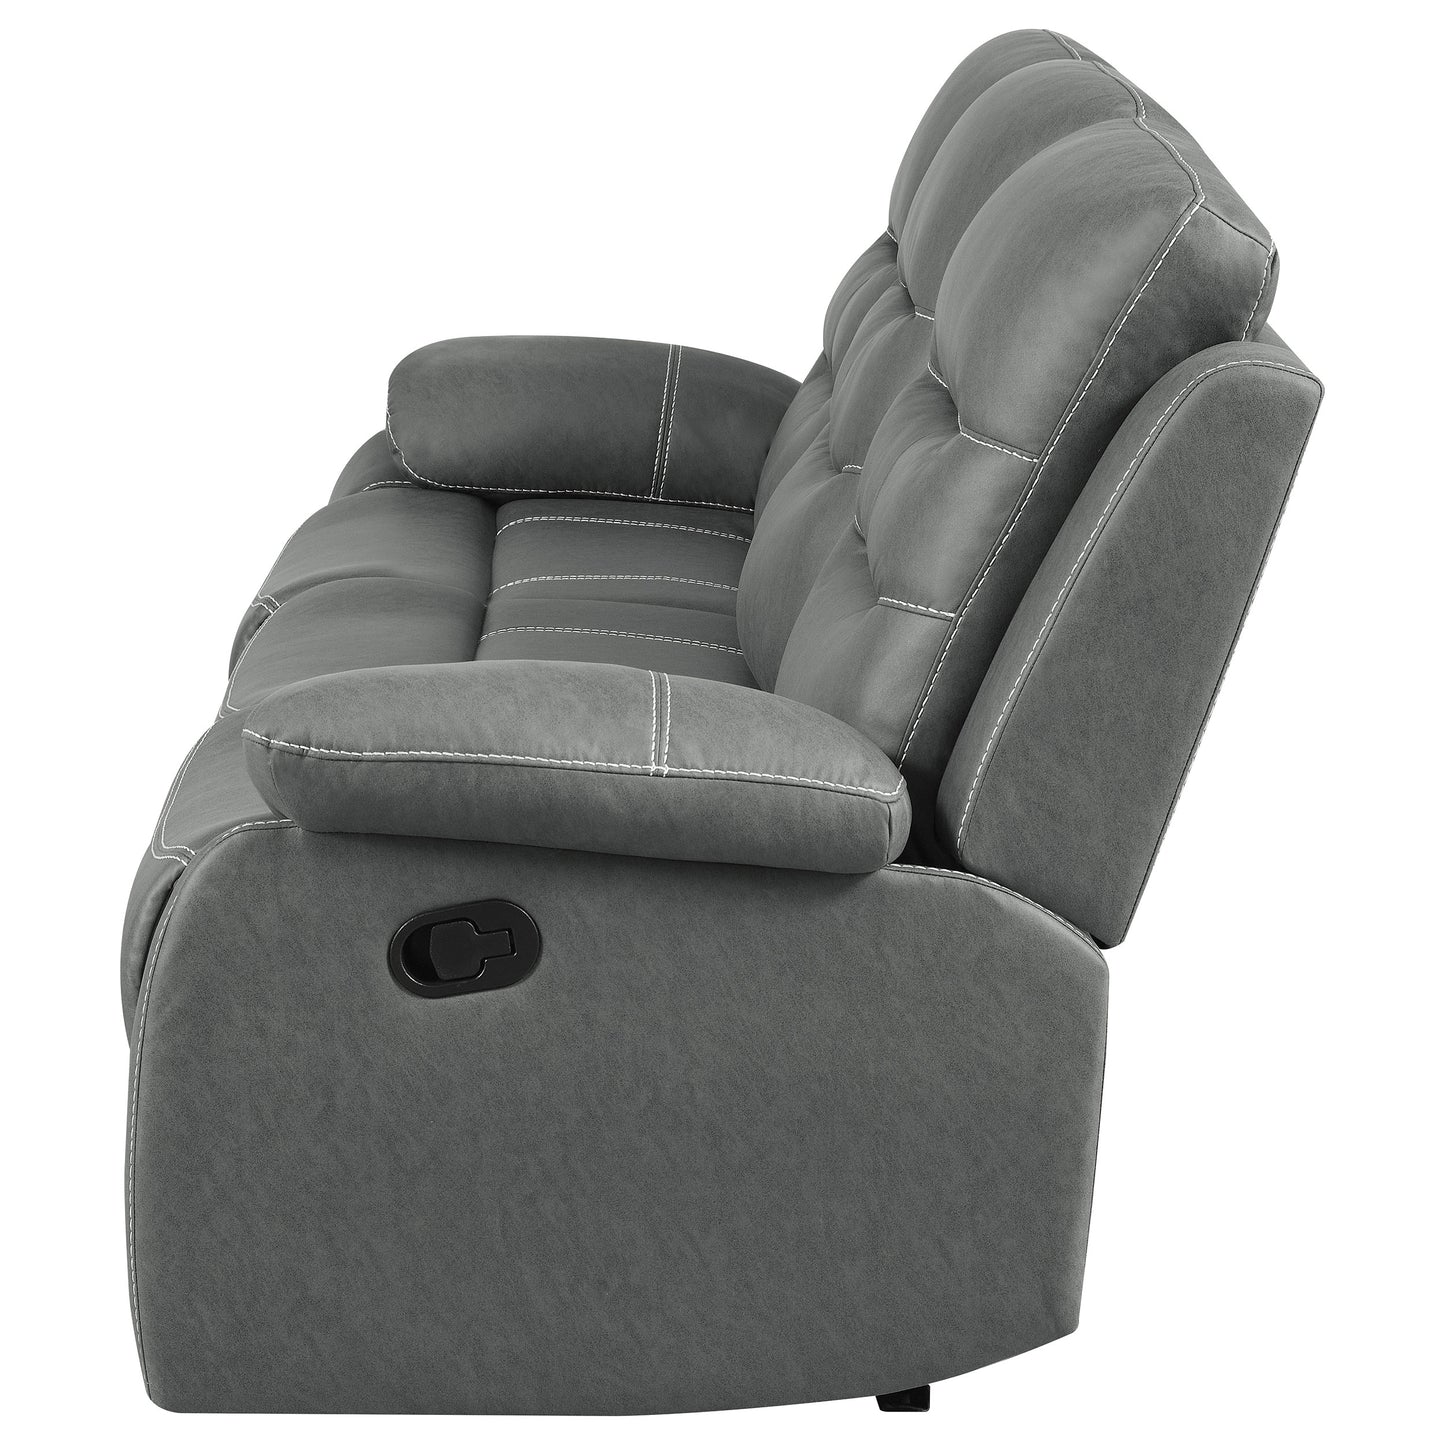 Nova Upholstered Motion Reclining Sofa Dark Grey